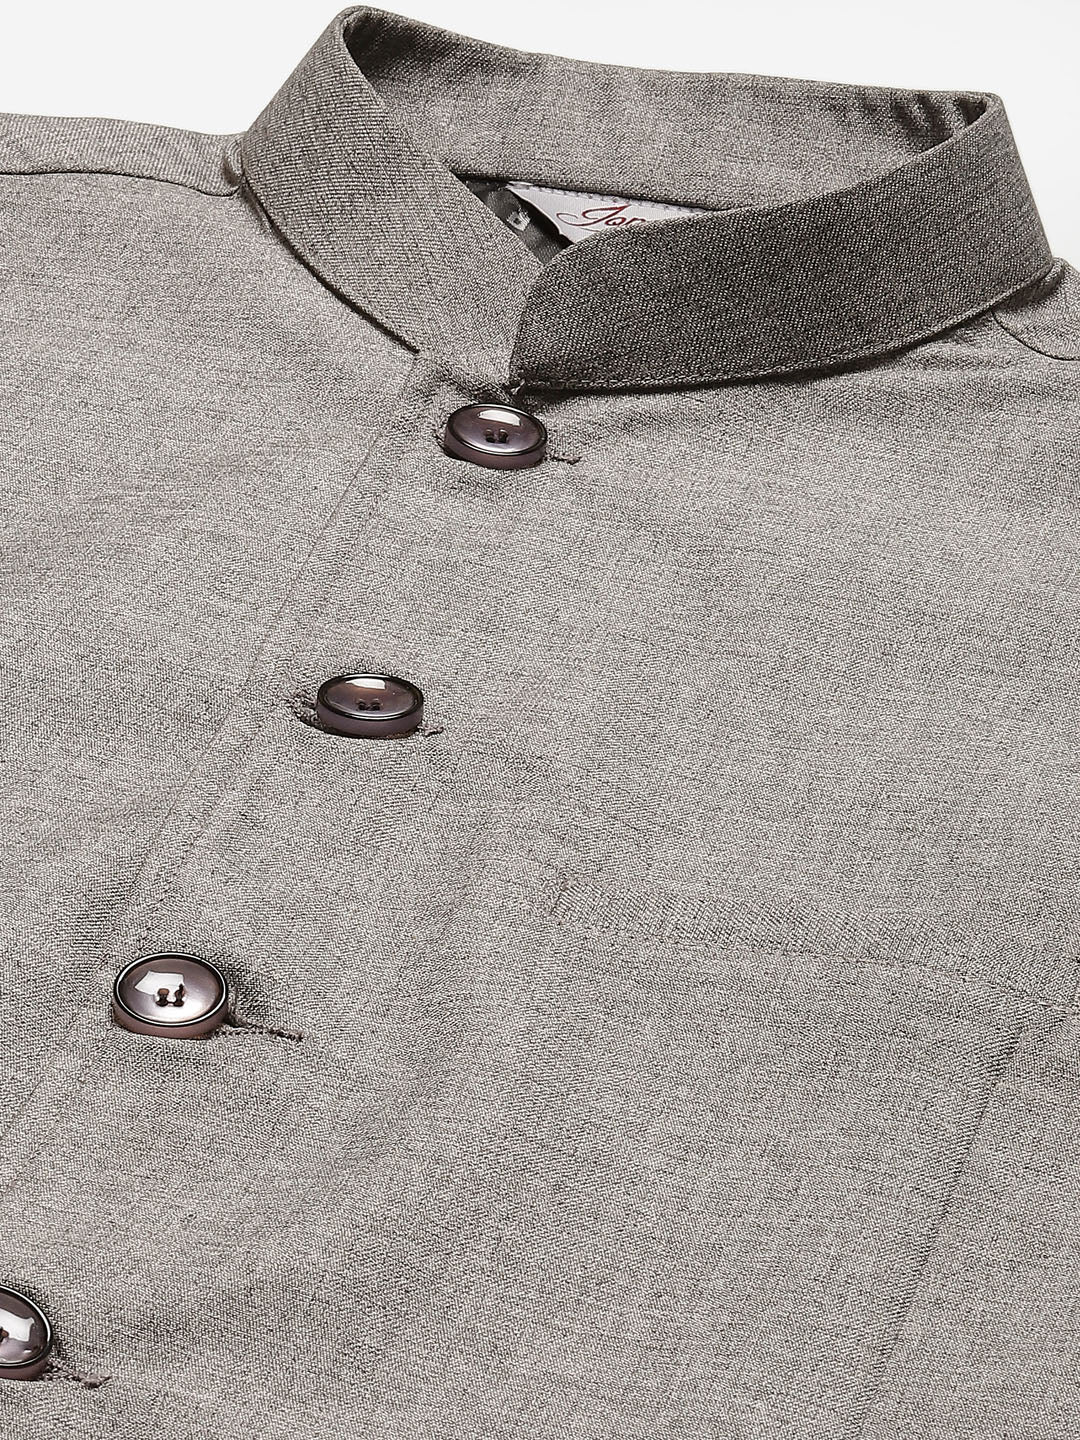 Men's Grey Solid Nehru Jacket ( JOWC 4033Grey ) - Virat Fashions